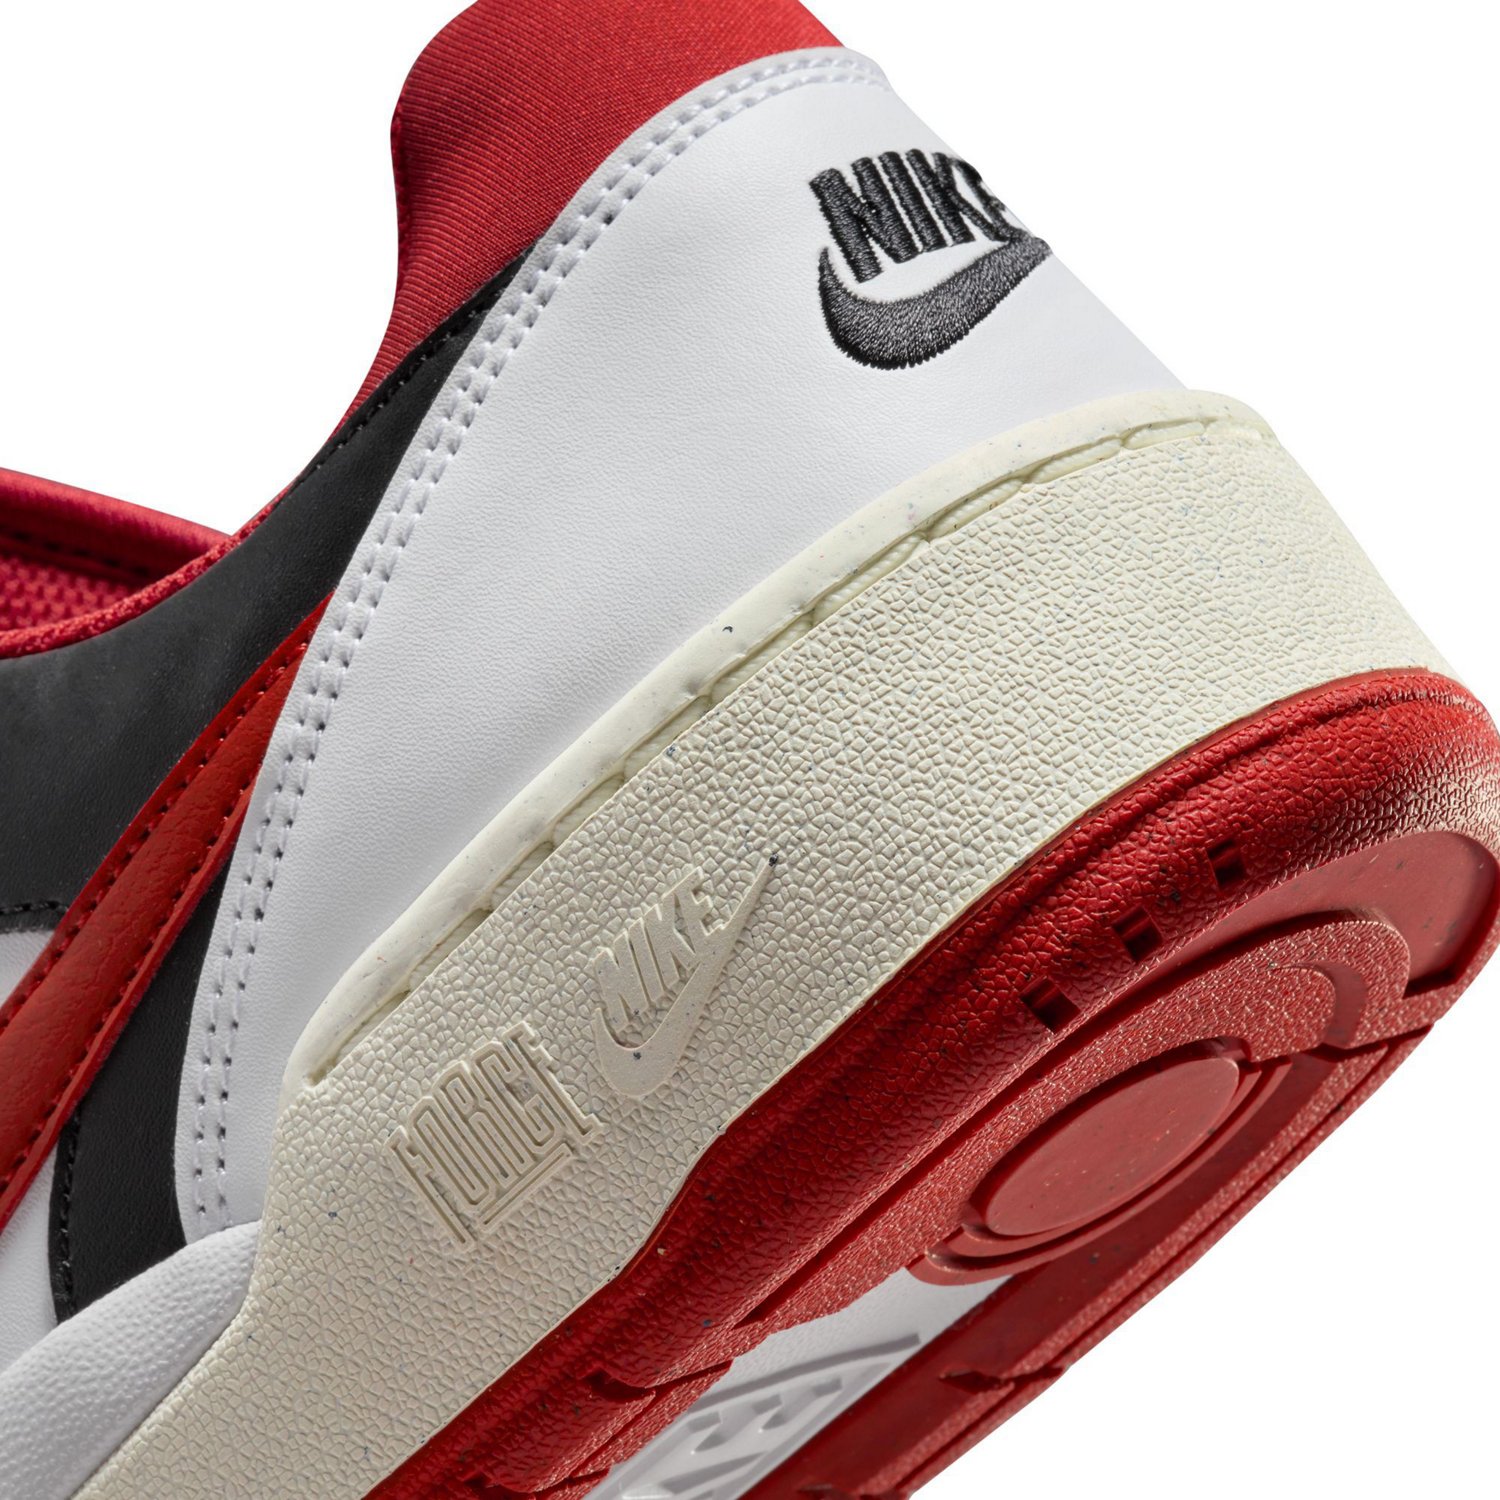  Nike Men's Air Force 1 Ultraforce Hi Basketball Shoe (8)